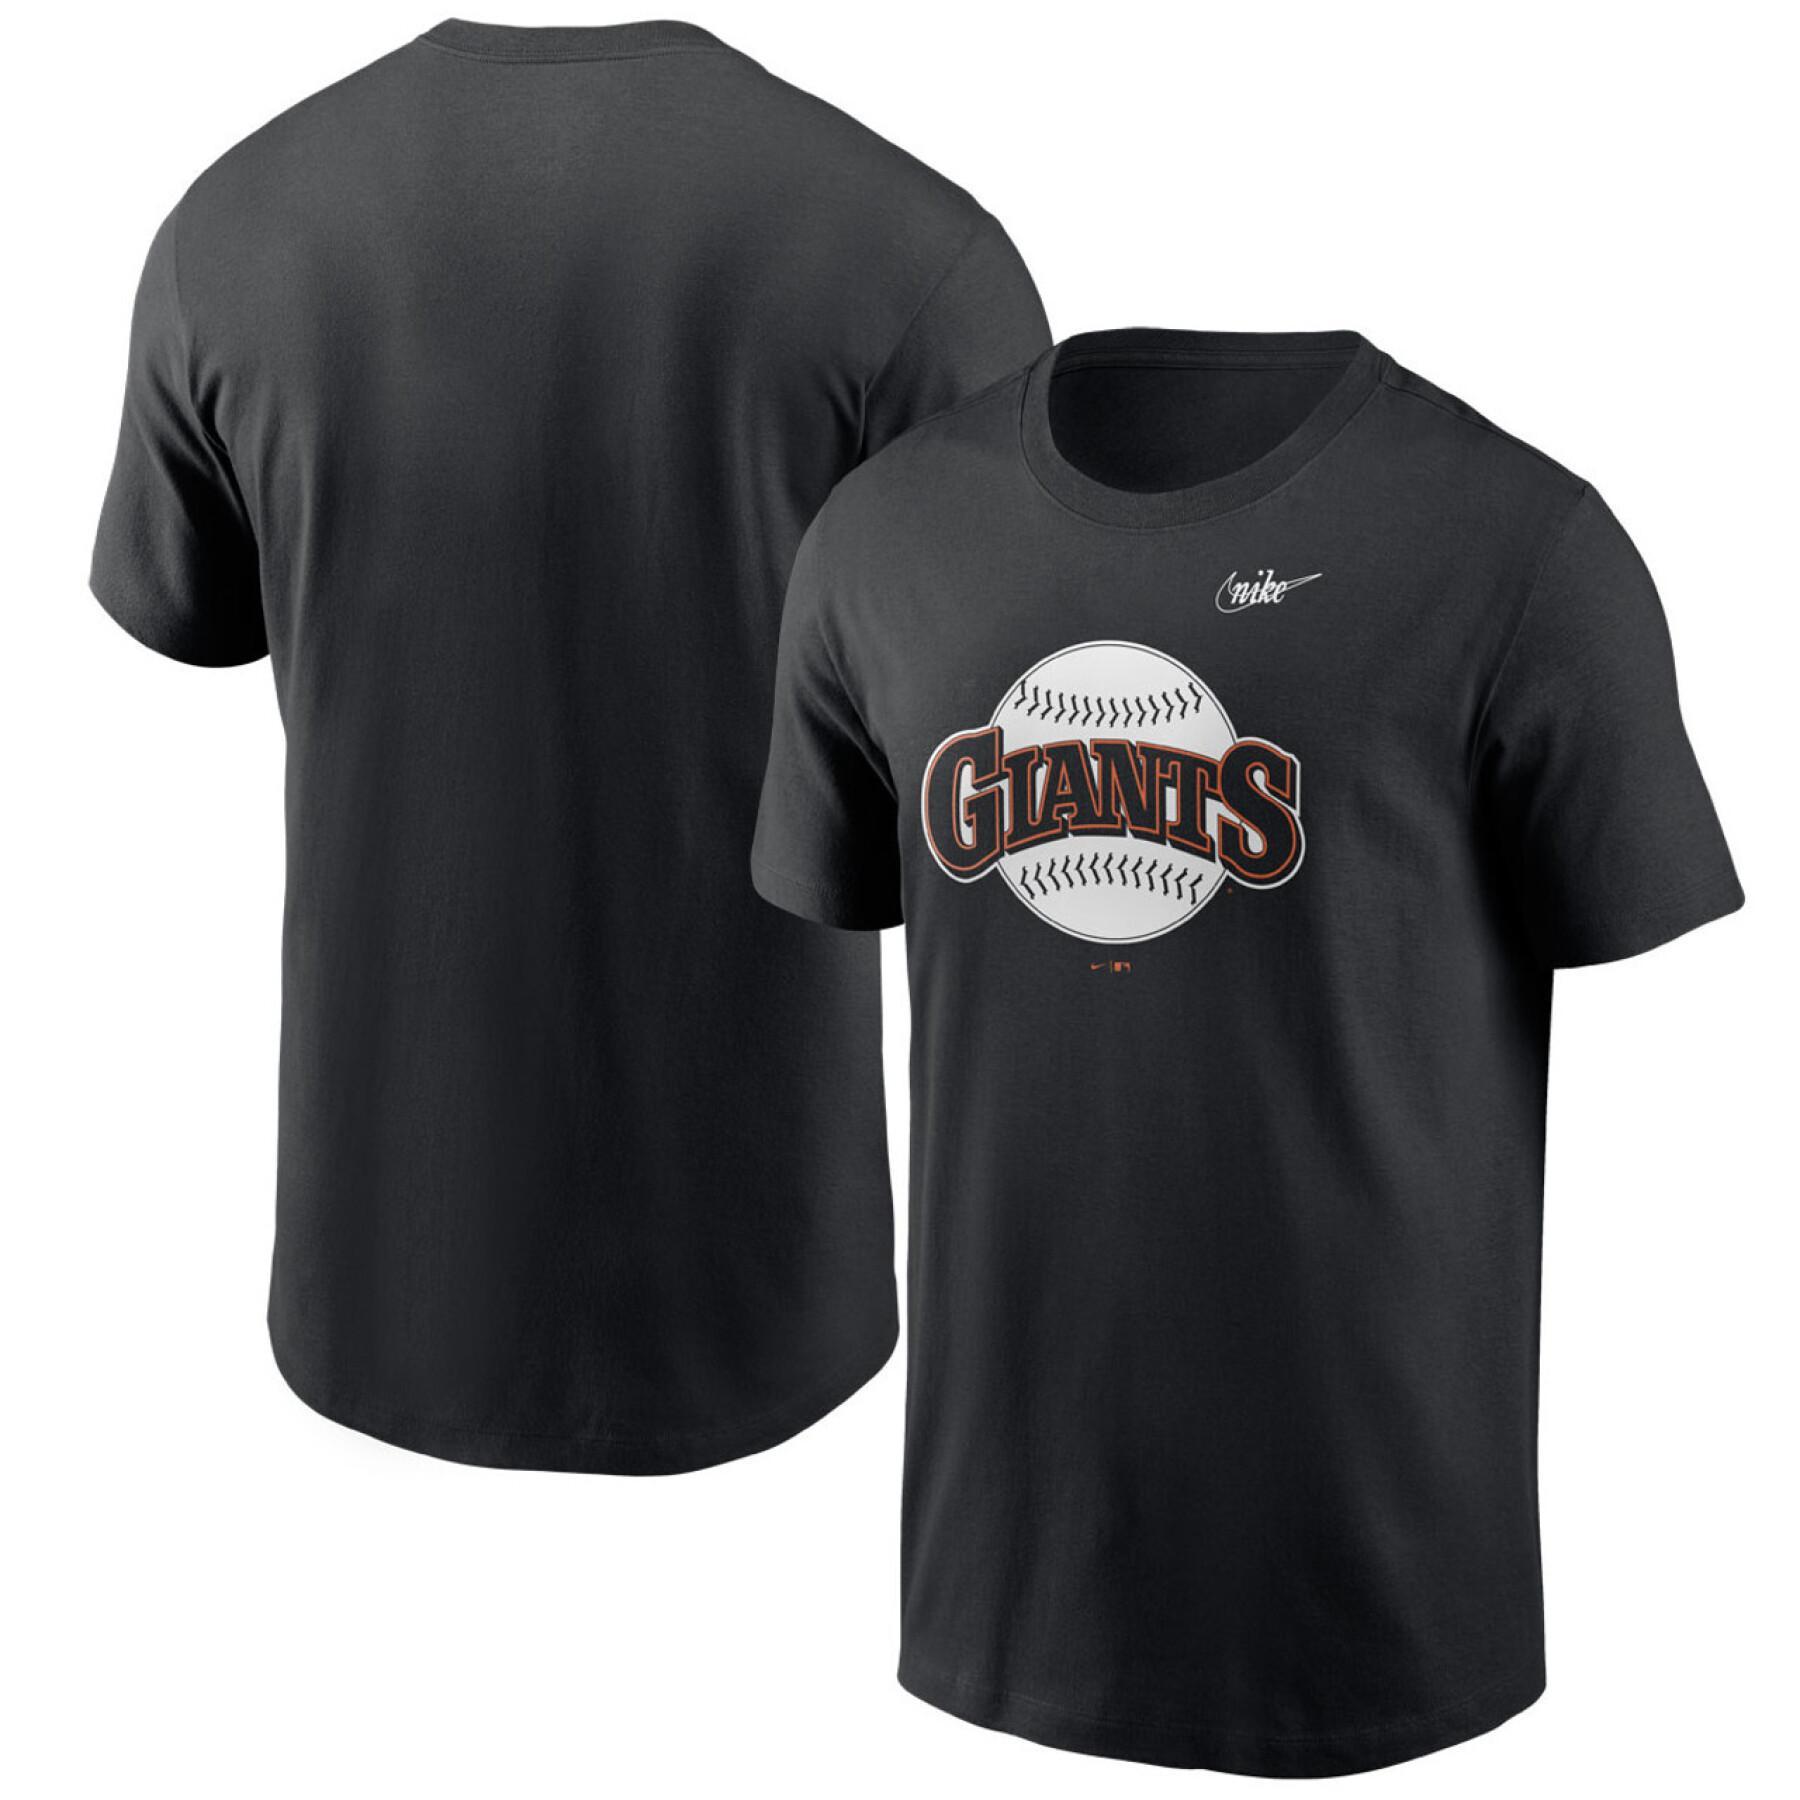 T-shirt Giants Cooperstown Logo